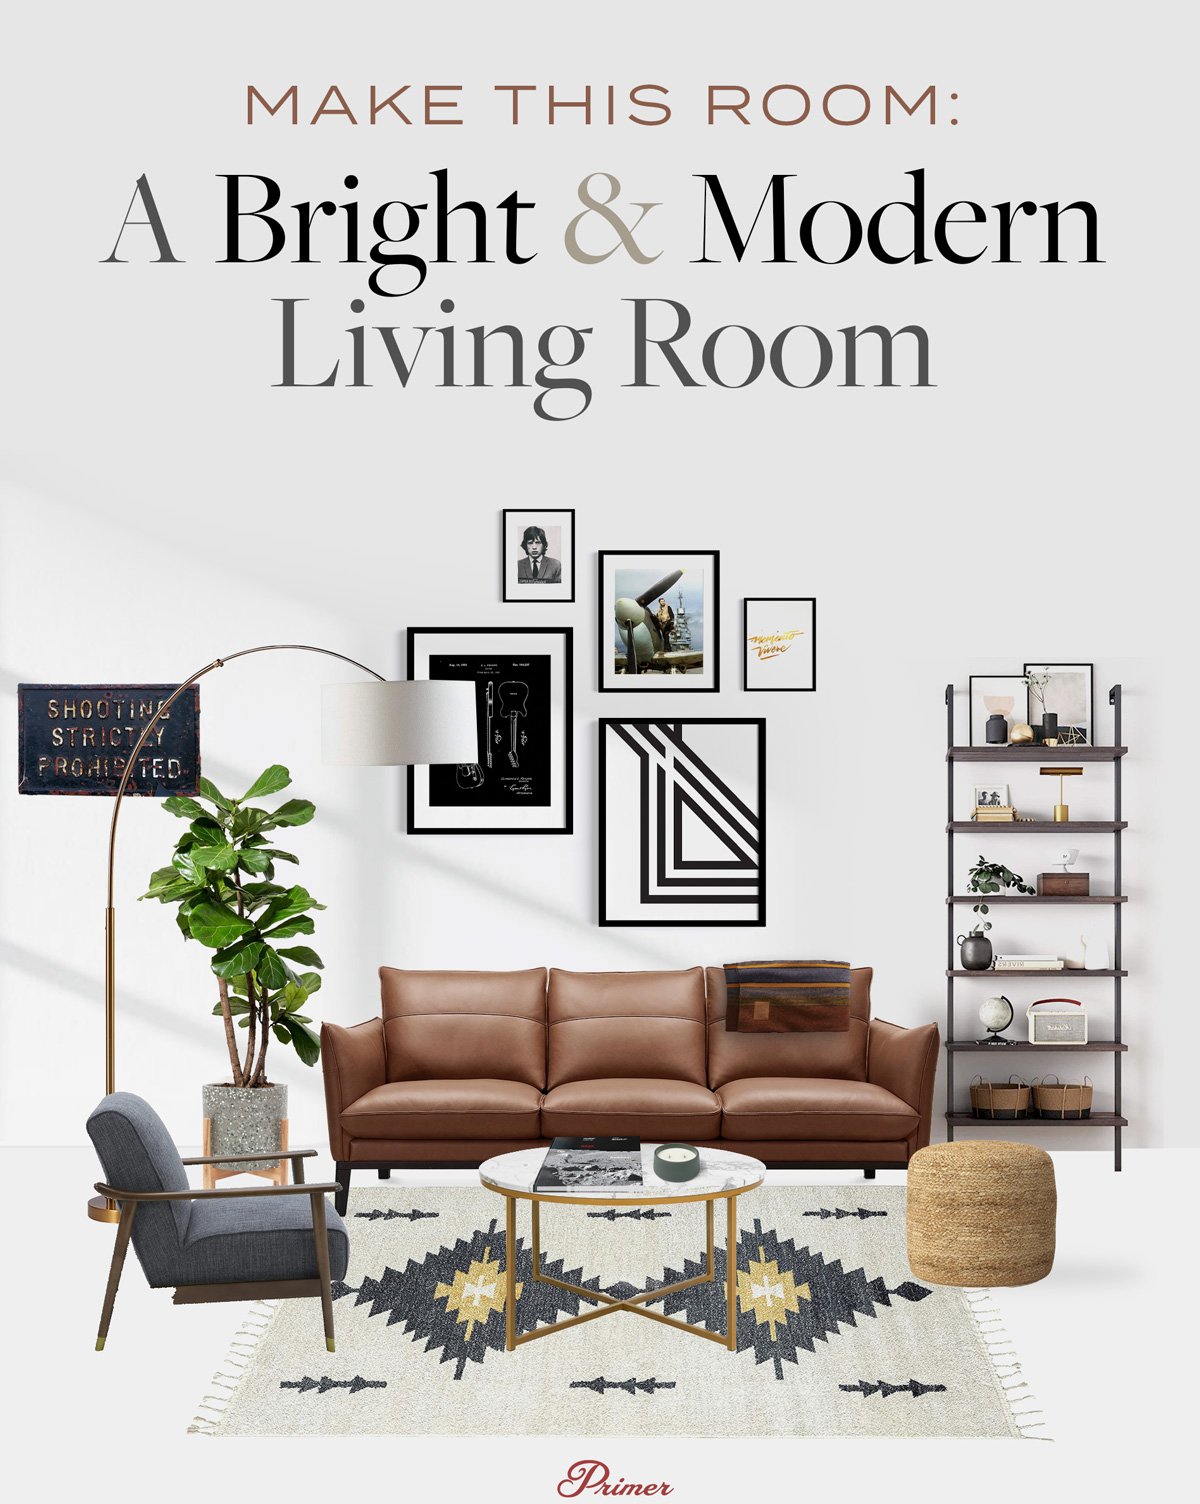 jadikan ruangan ini: inspirasi ruang tamu yang cerah & modern